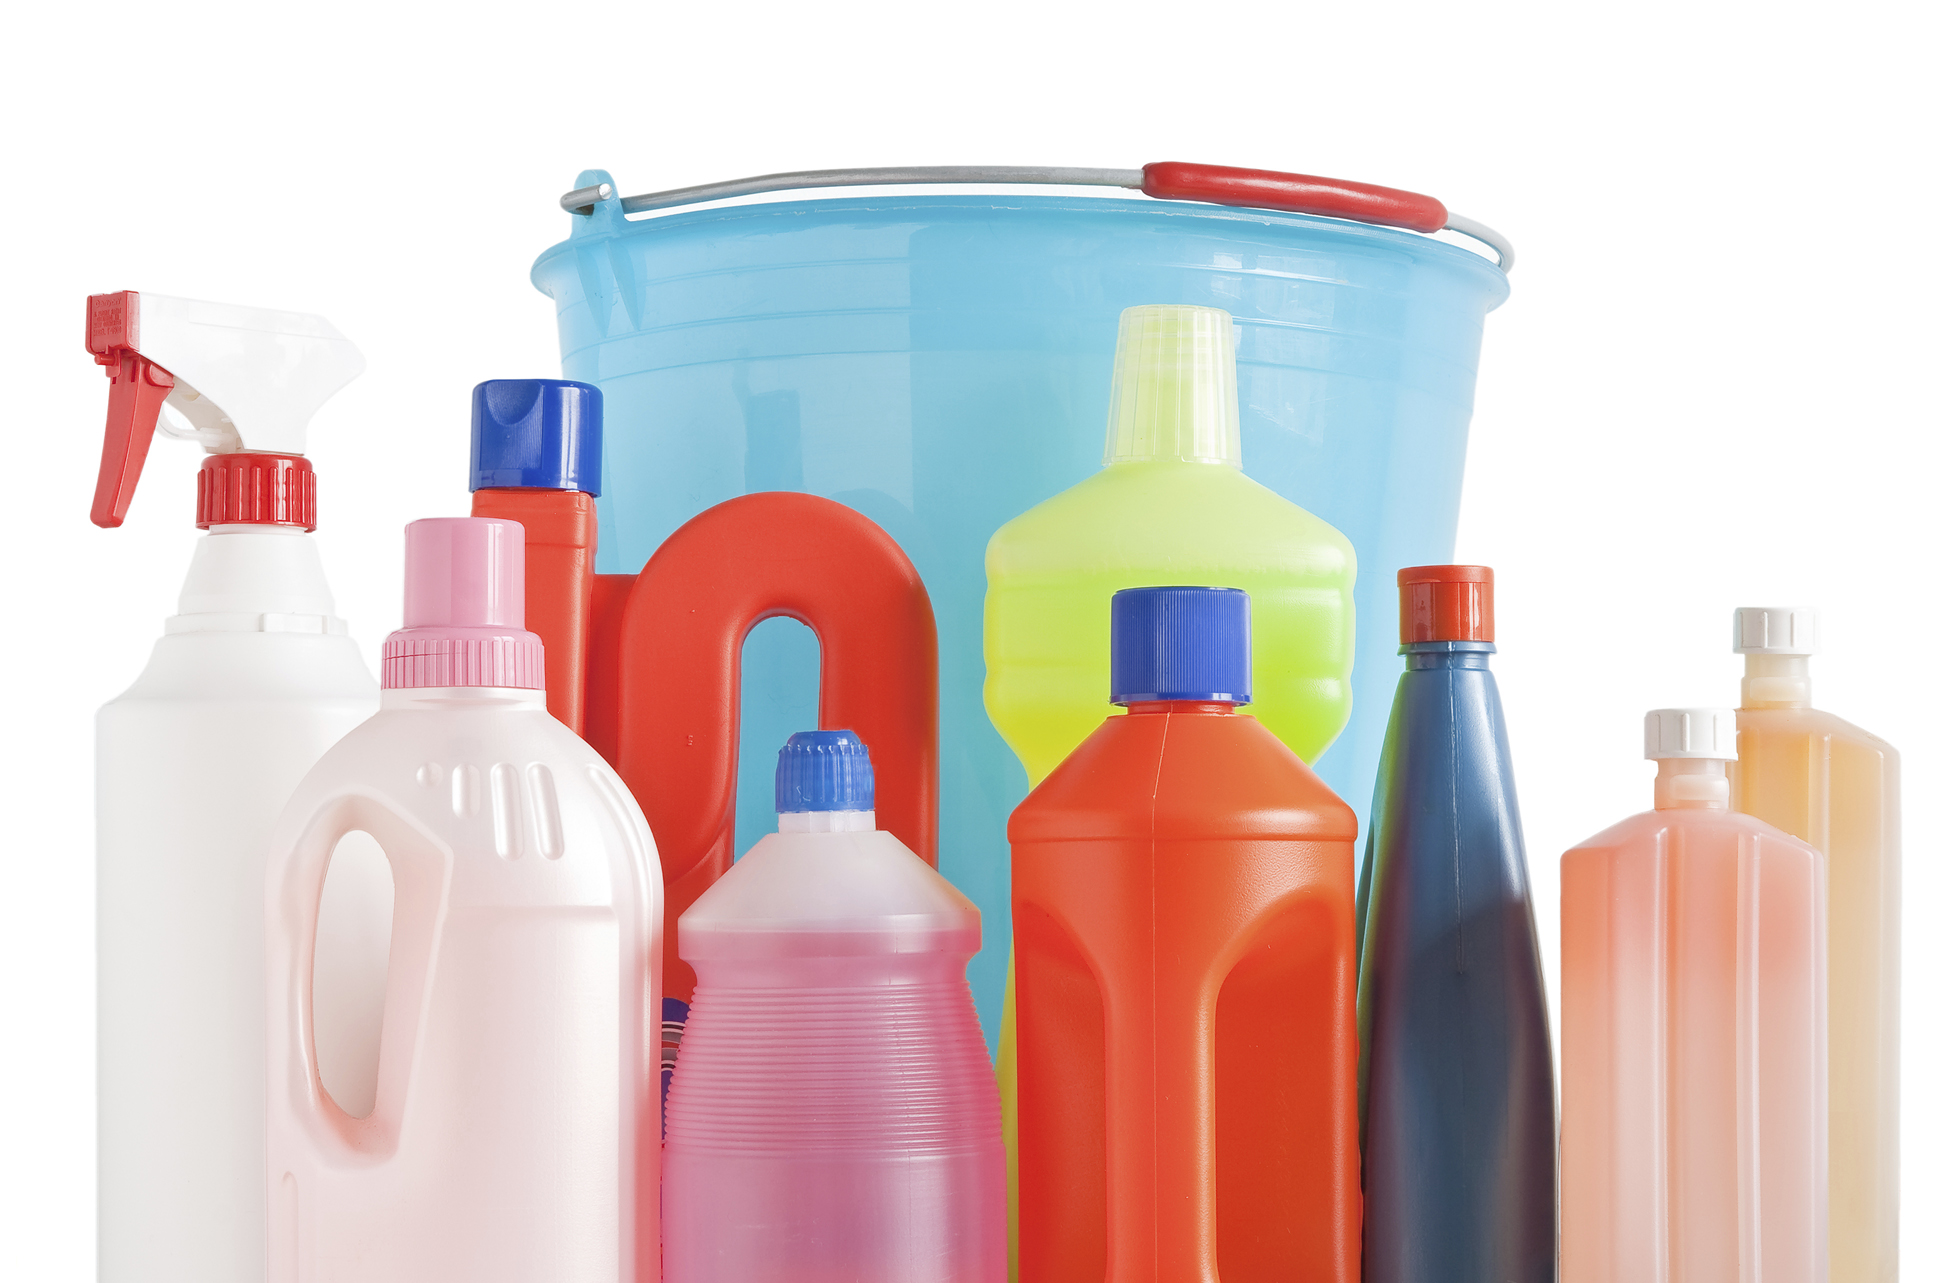 detergent bottles and bucket